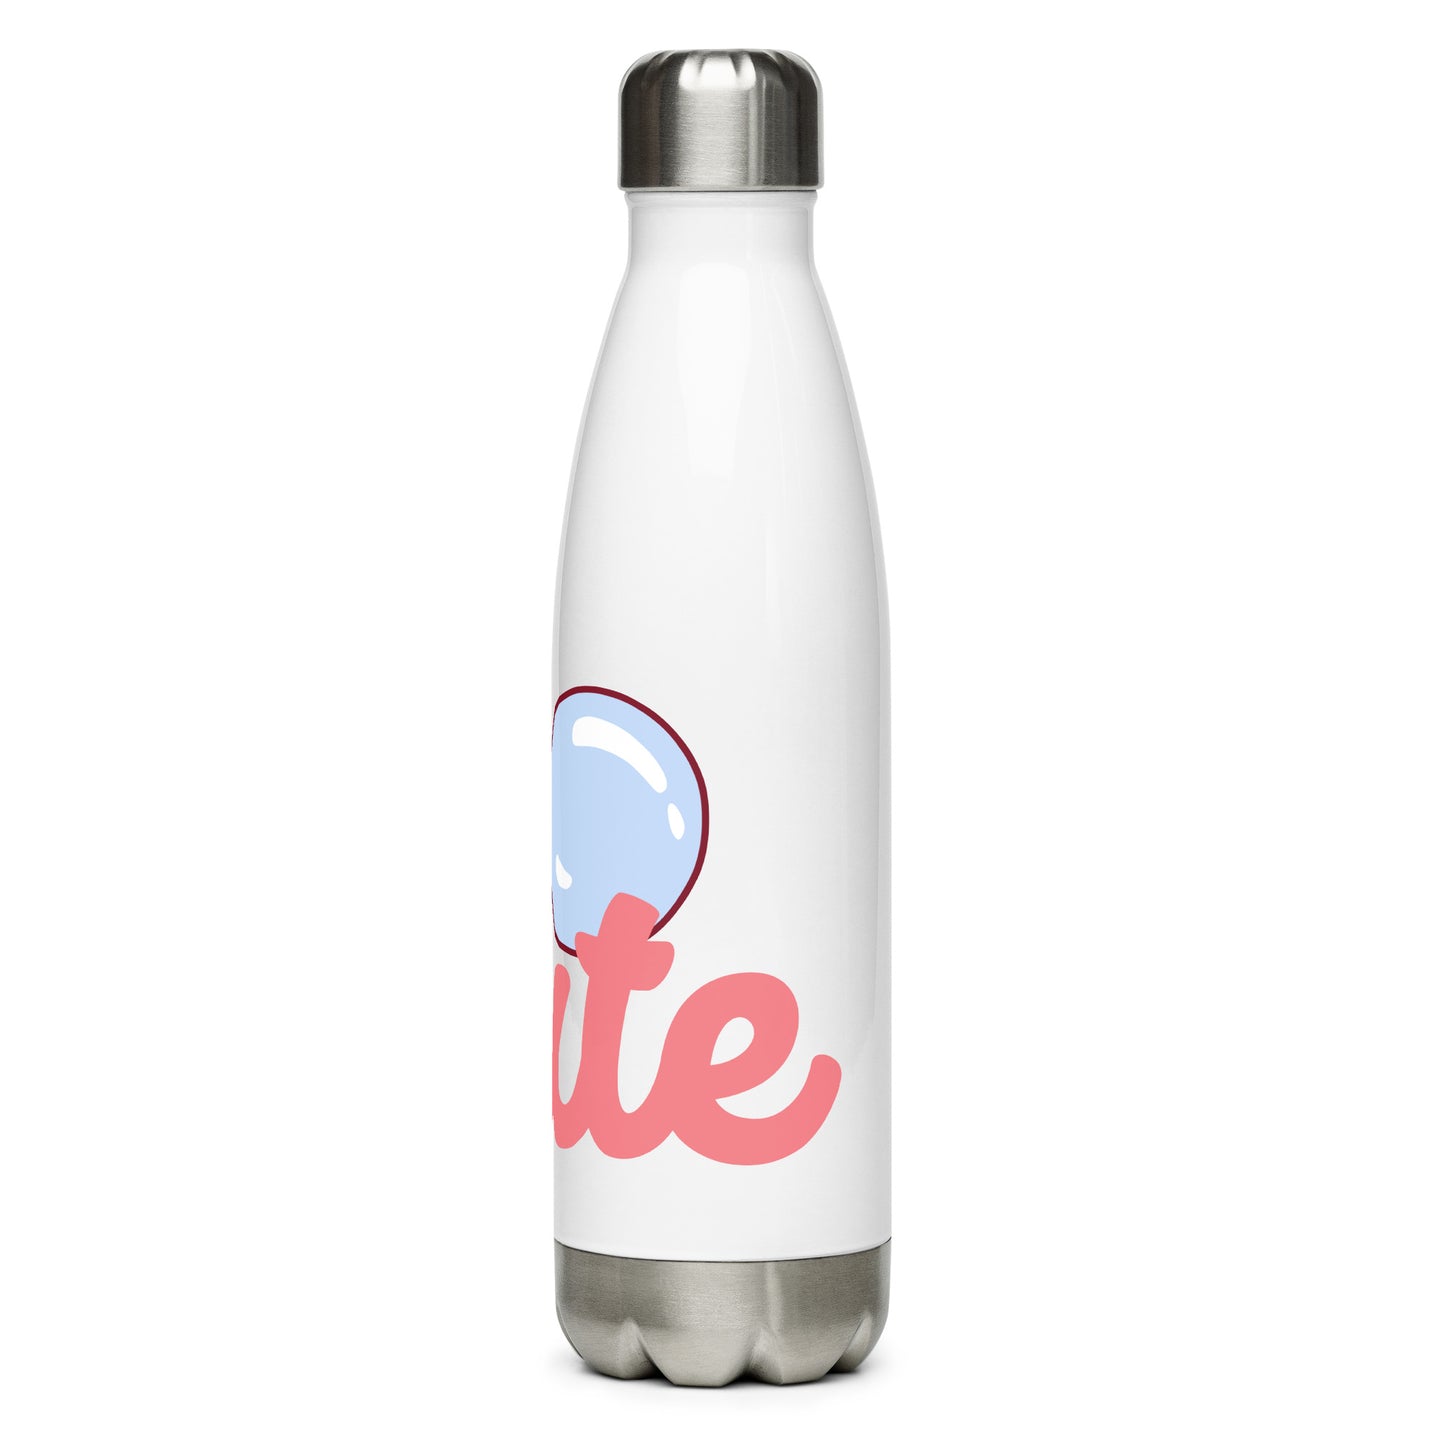 Chelsea Stainless steel Water Bottle